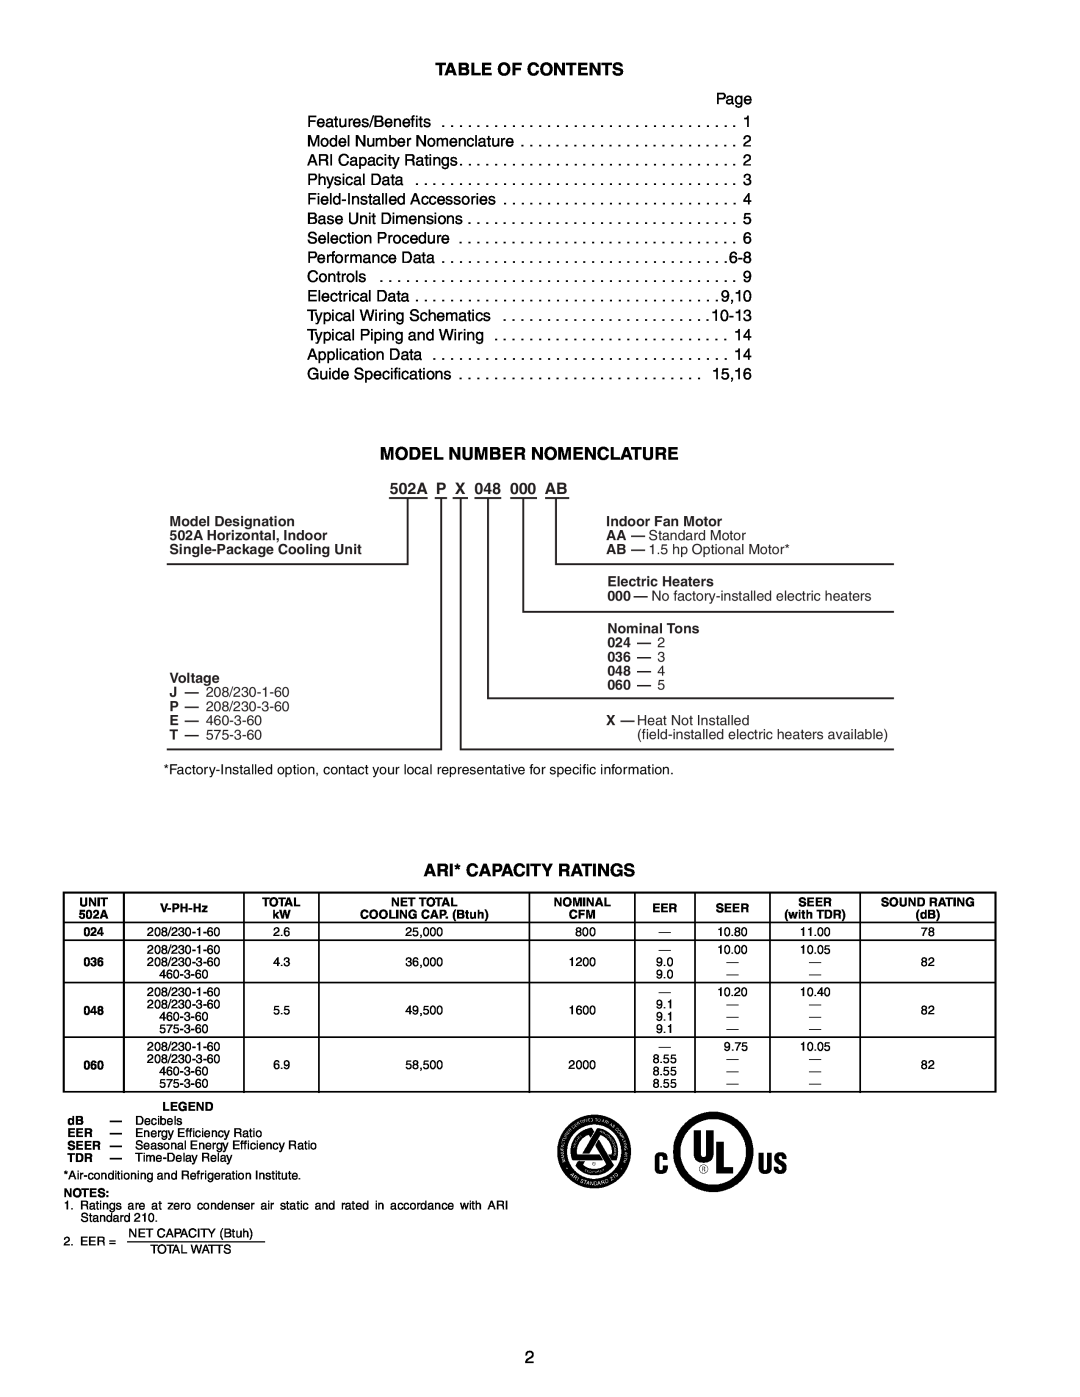 Bryant manual Table Of Contents, Model Number Nomenclature, Ari* Capacity Ratings, 502A P X 048 000 AB 